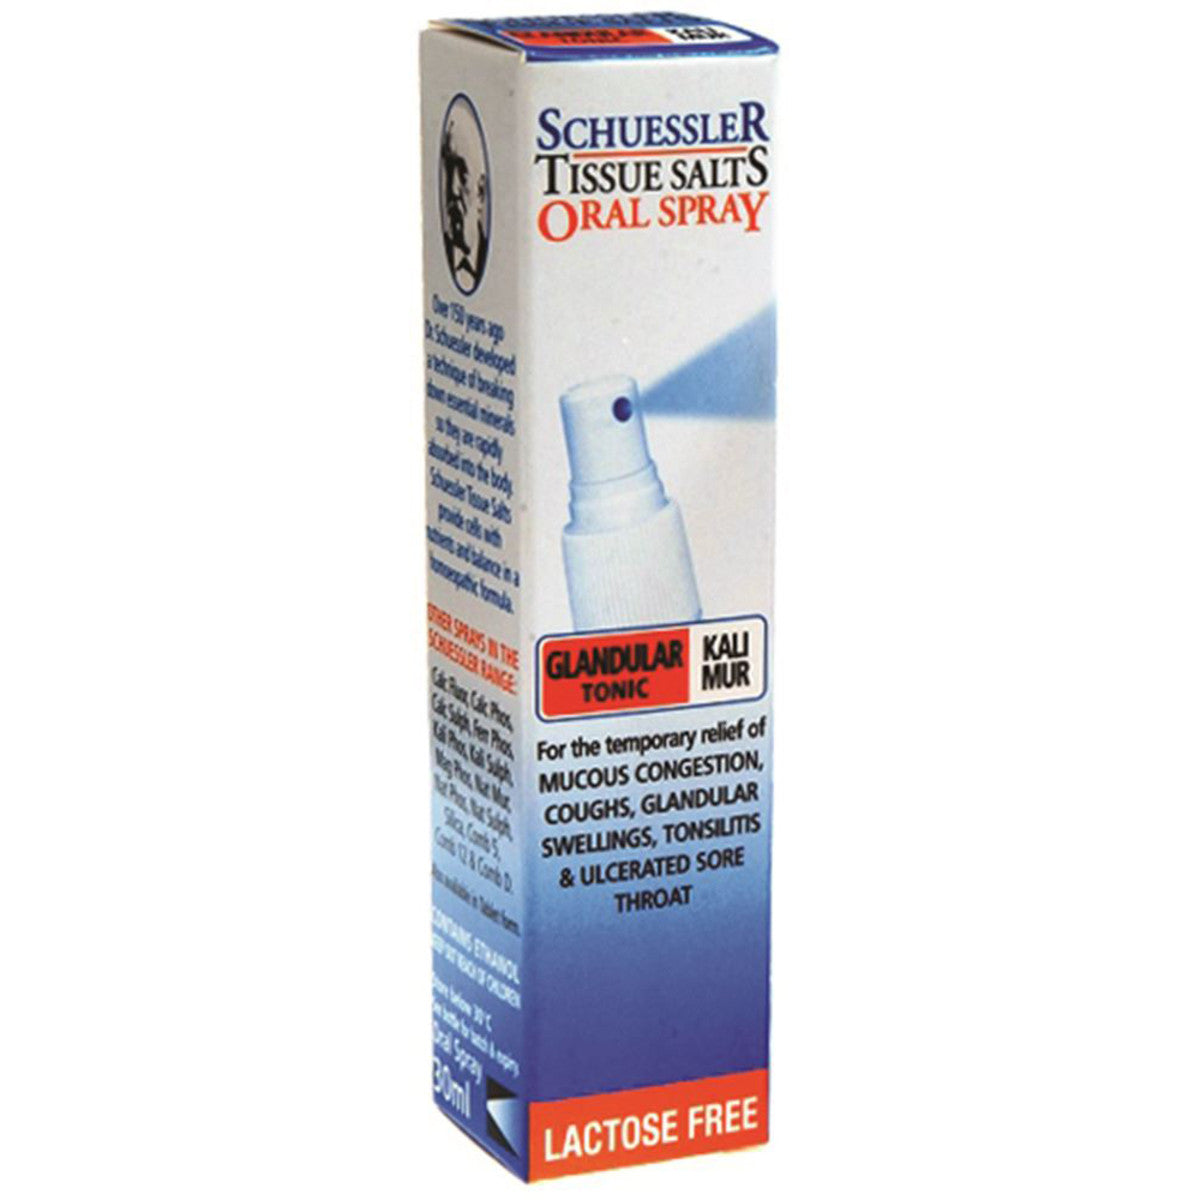 Martin & Pleasance Schuessler Tissue Salts Kali Mur 30ml Spray, Glandular Tonic